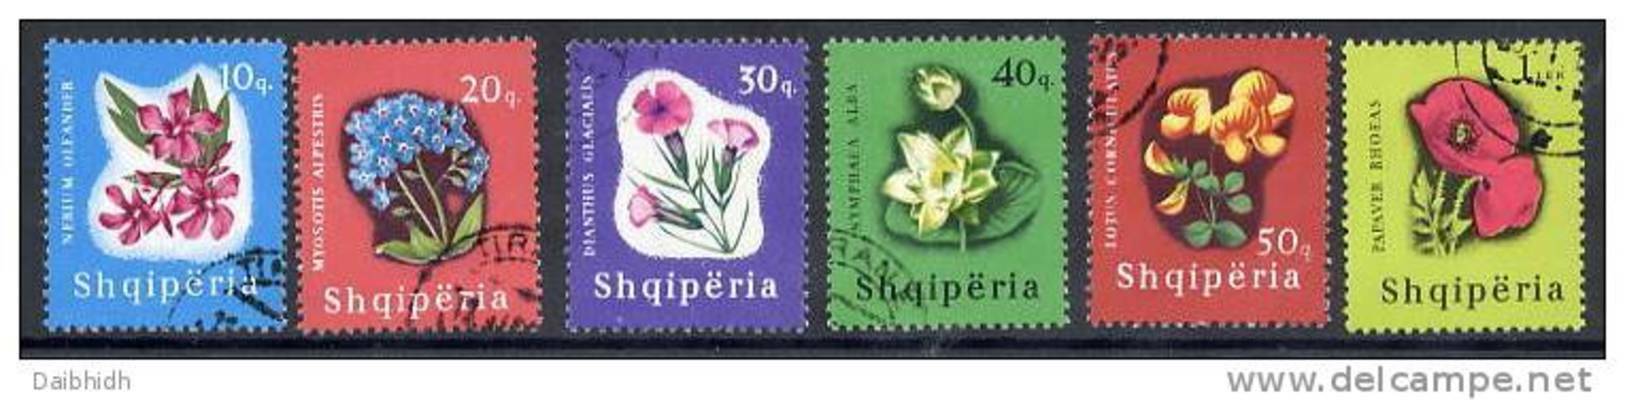 ALBANIA 1965 Flowering Plants Set  Used.  Michel 988-93 - Albania